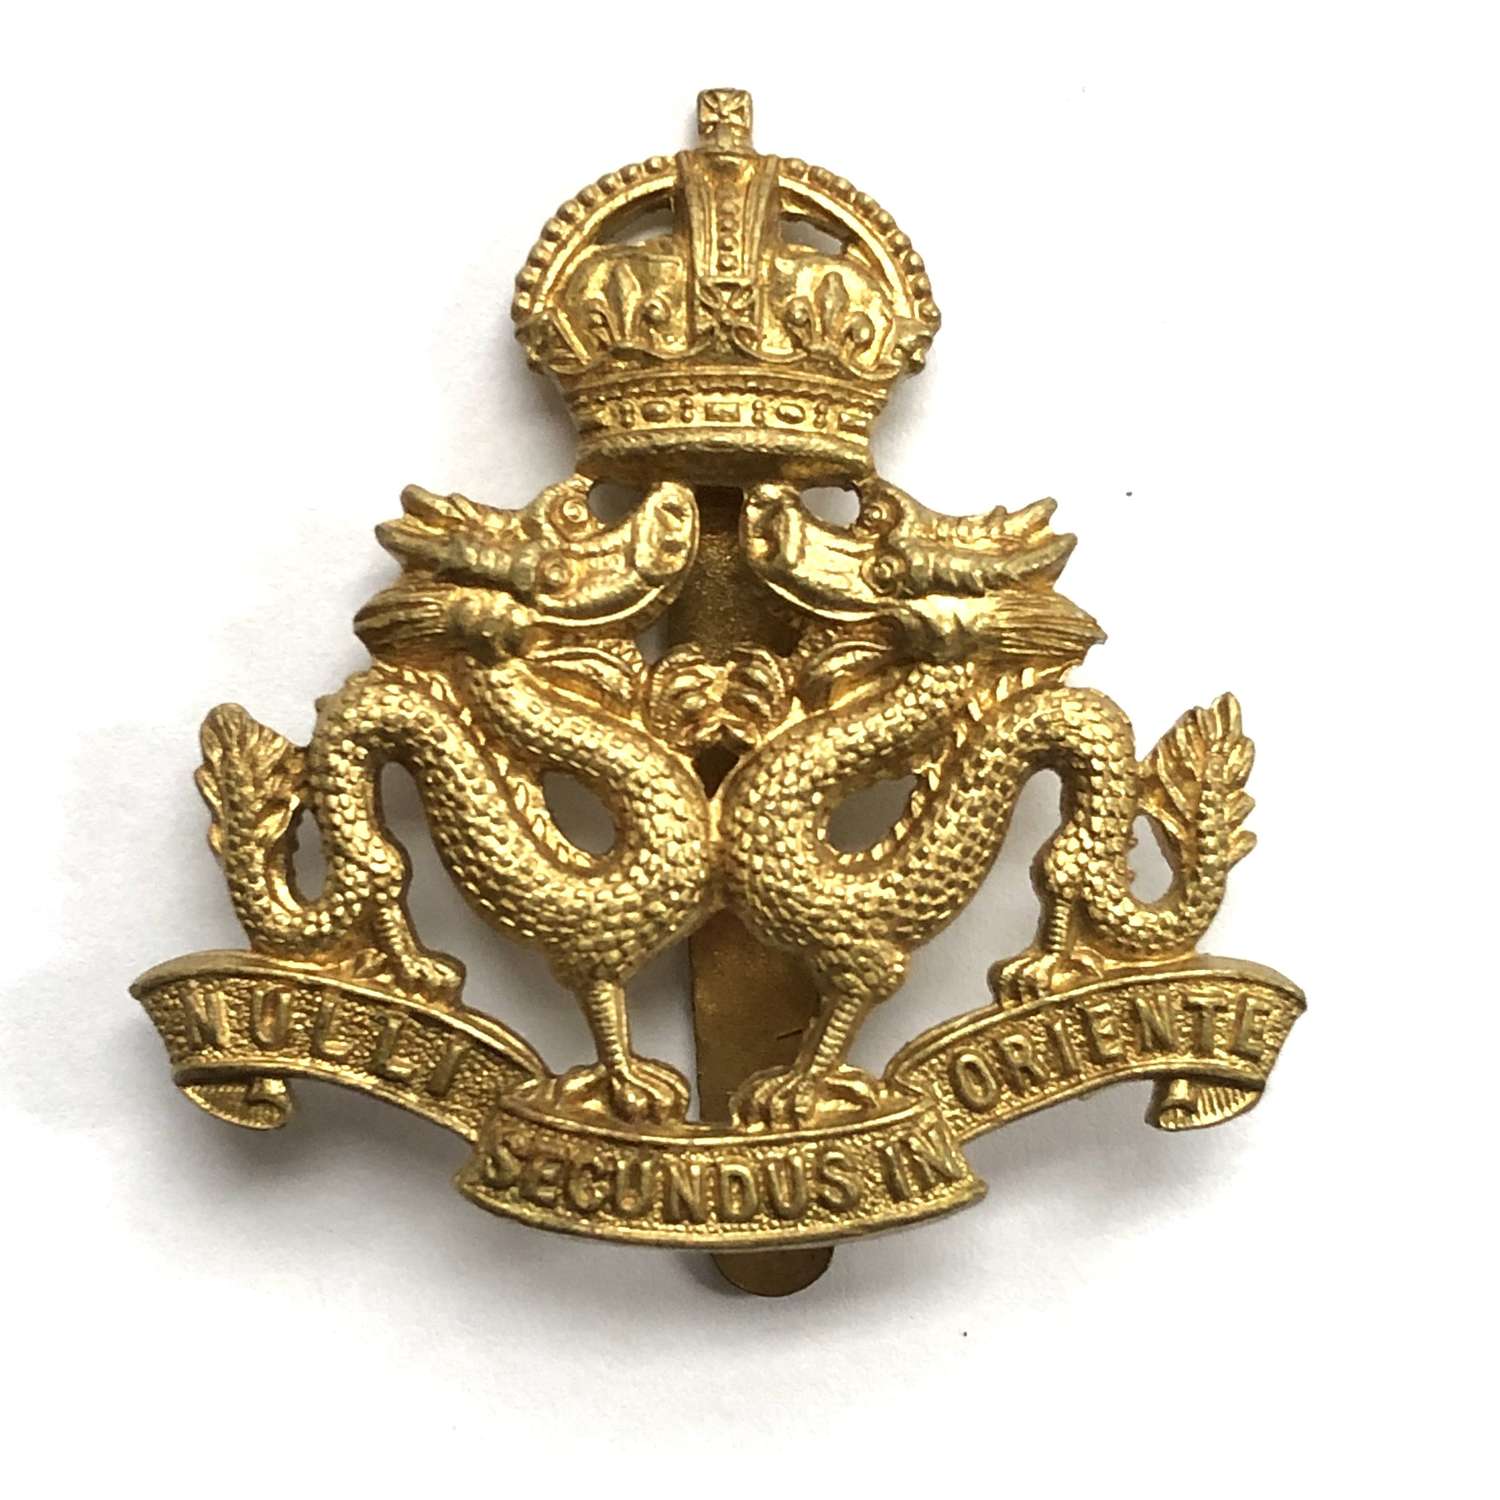 Hong Kong Volunteer Defence Corps cap badge circa 1931-46 by Firmin